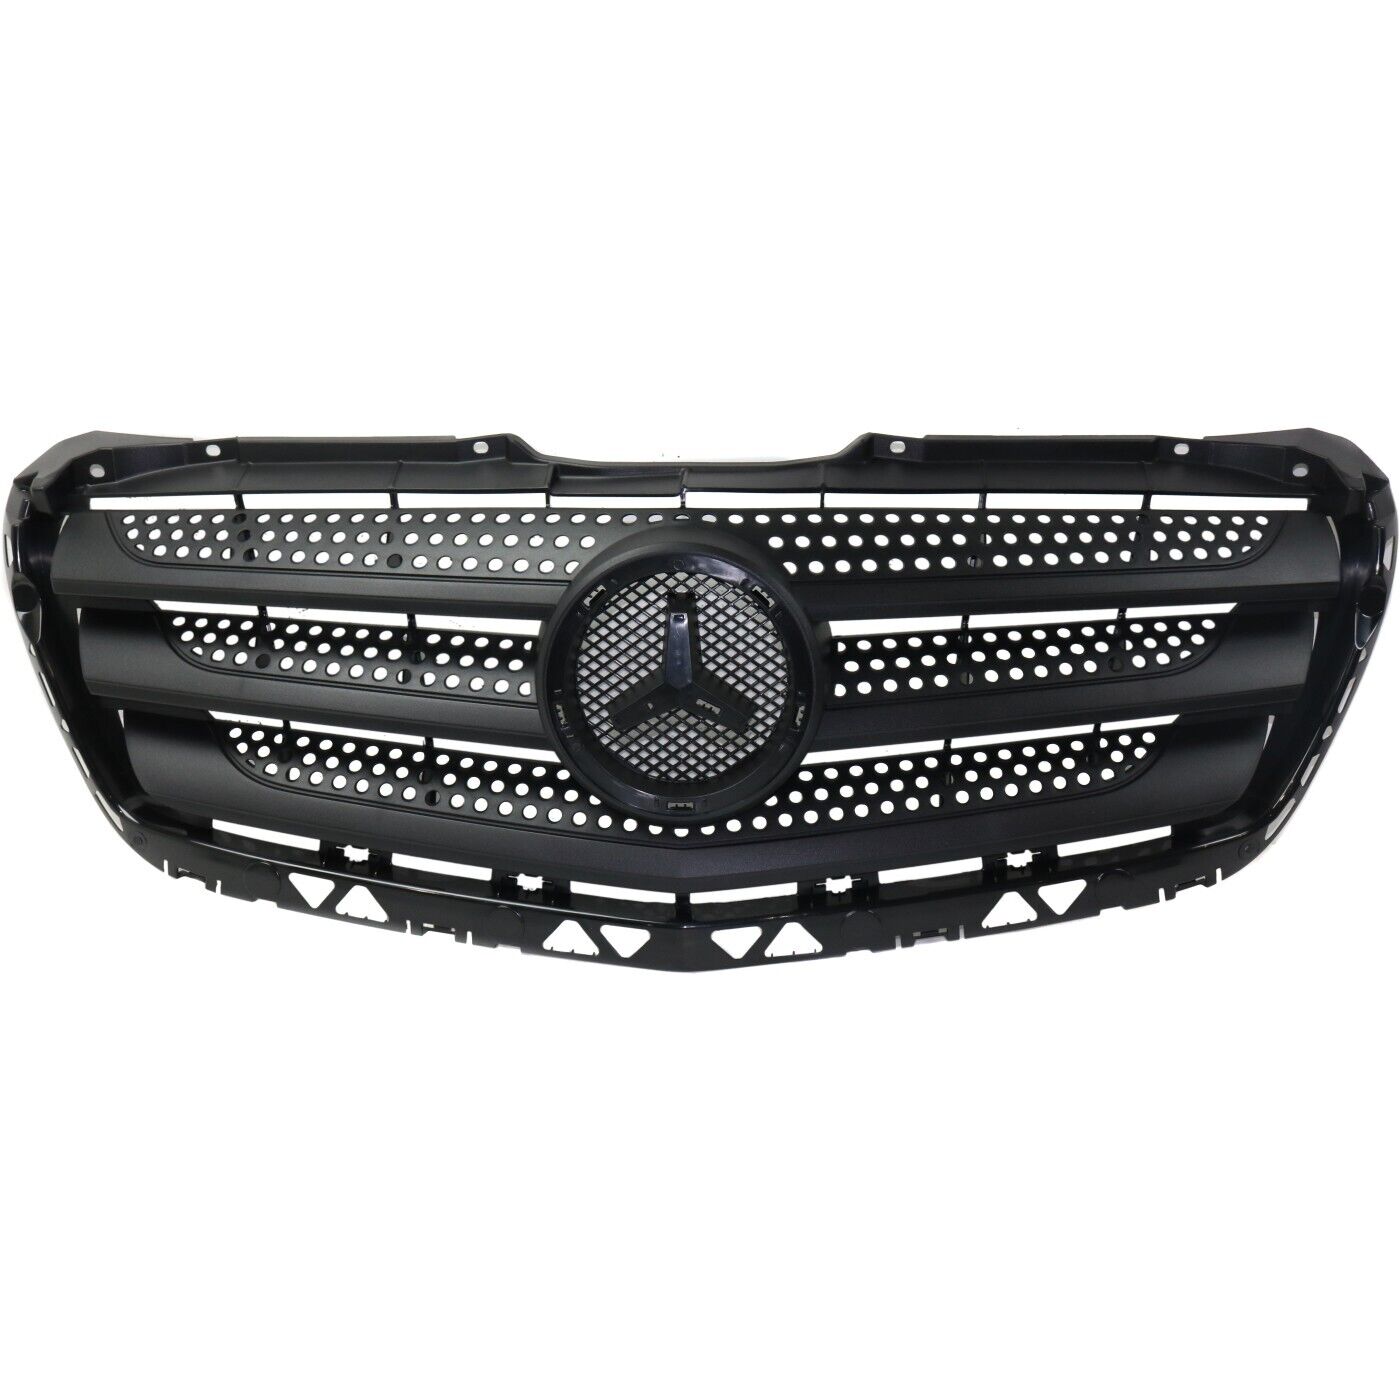 Grille Grill for Mercedes Van Mercedes-Benz Sprinter 2500 3500 2014-2018